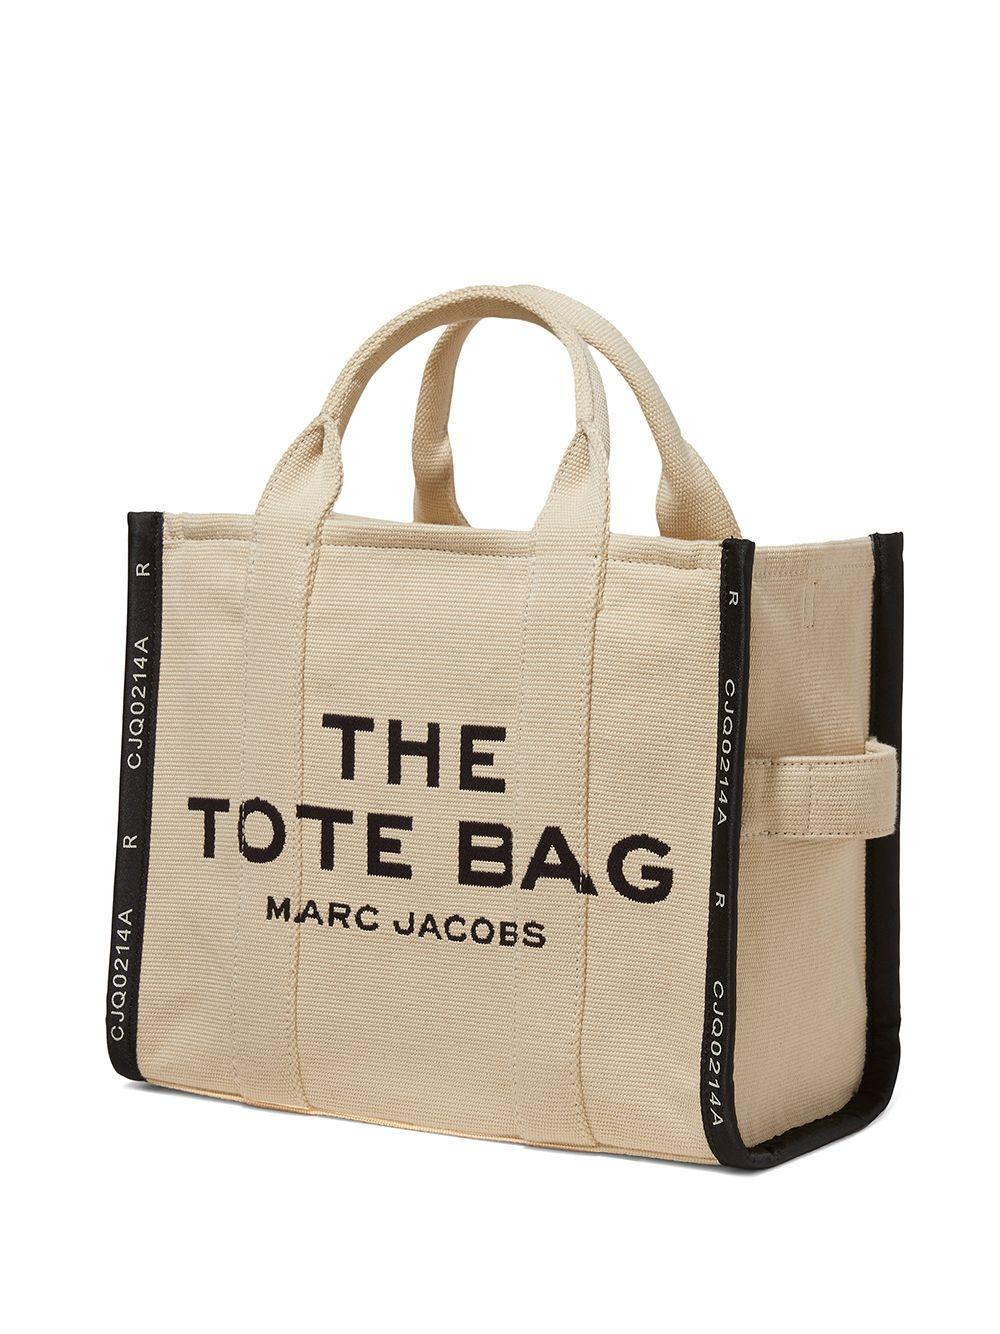 The Medium Tote Bag Marc Jacobs Warm Sand